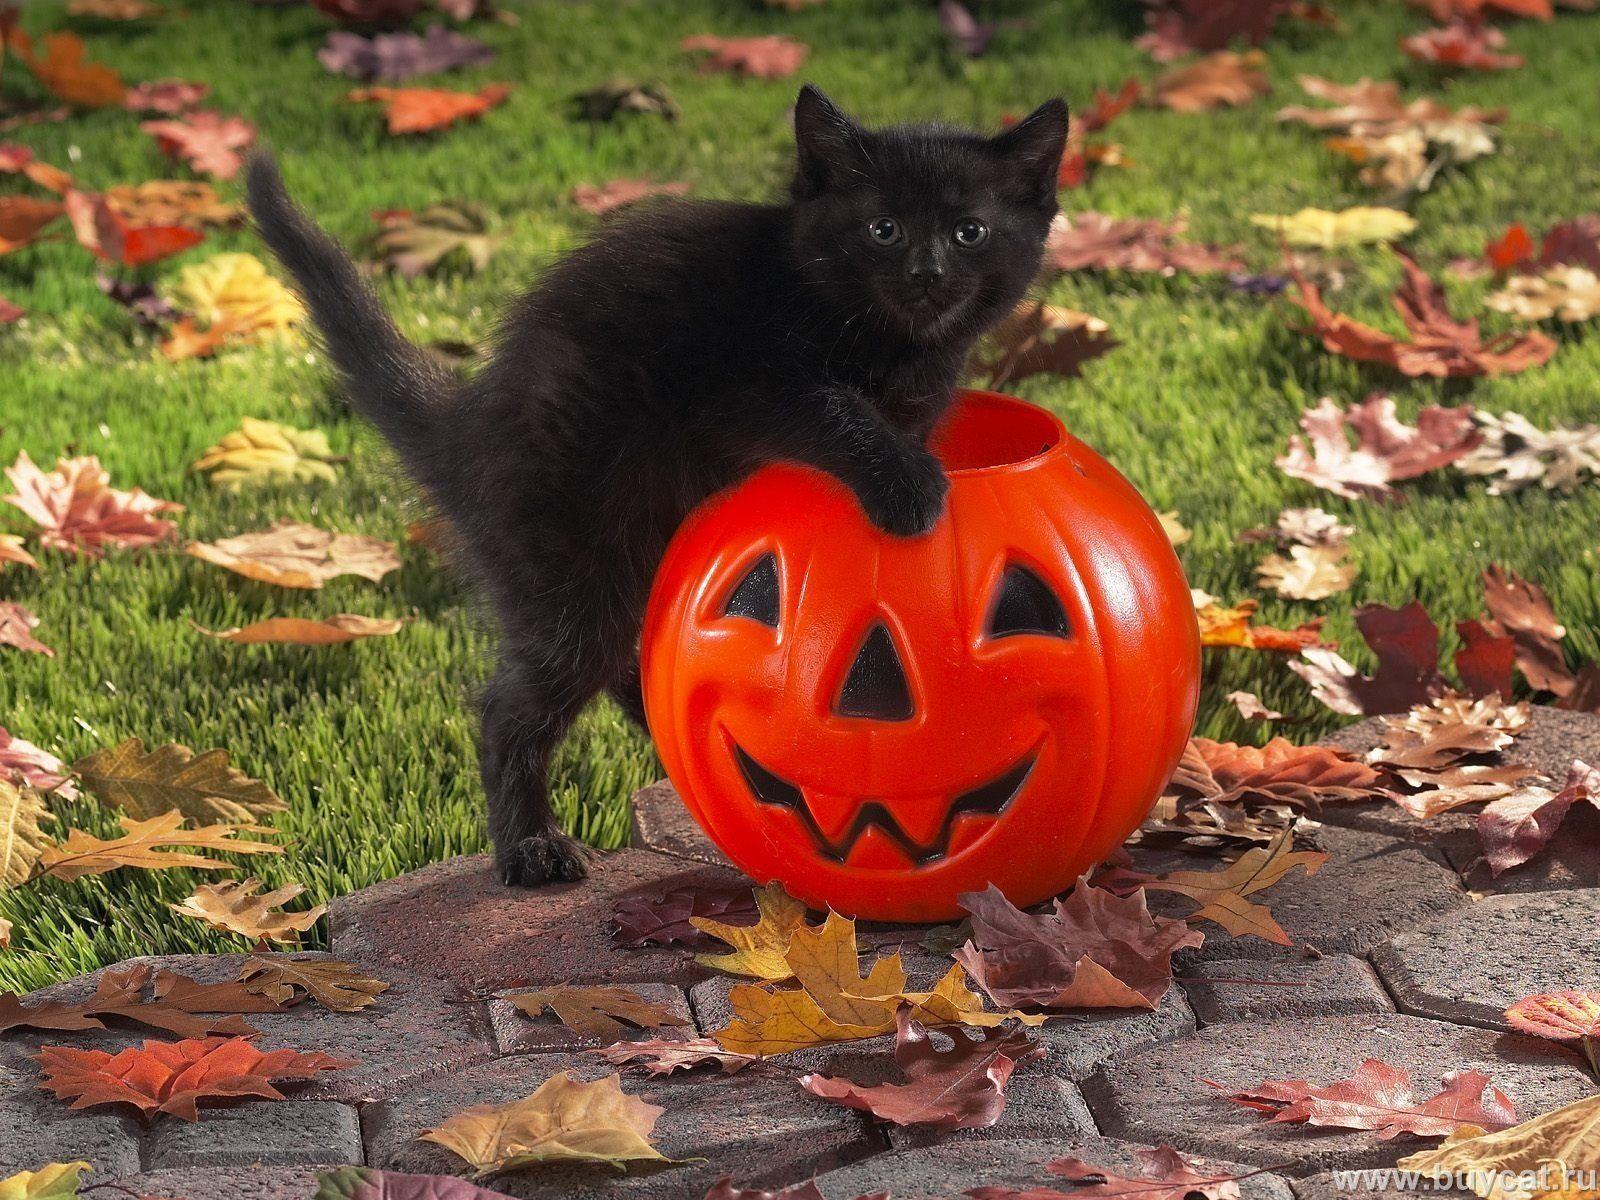 halloween kittens. Black Cat celebrates Halloween